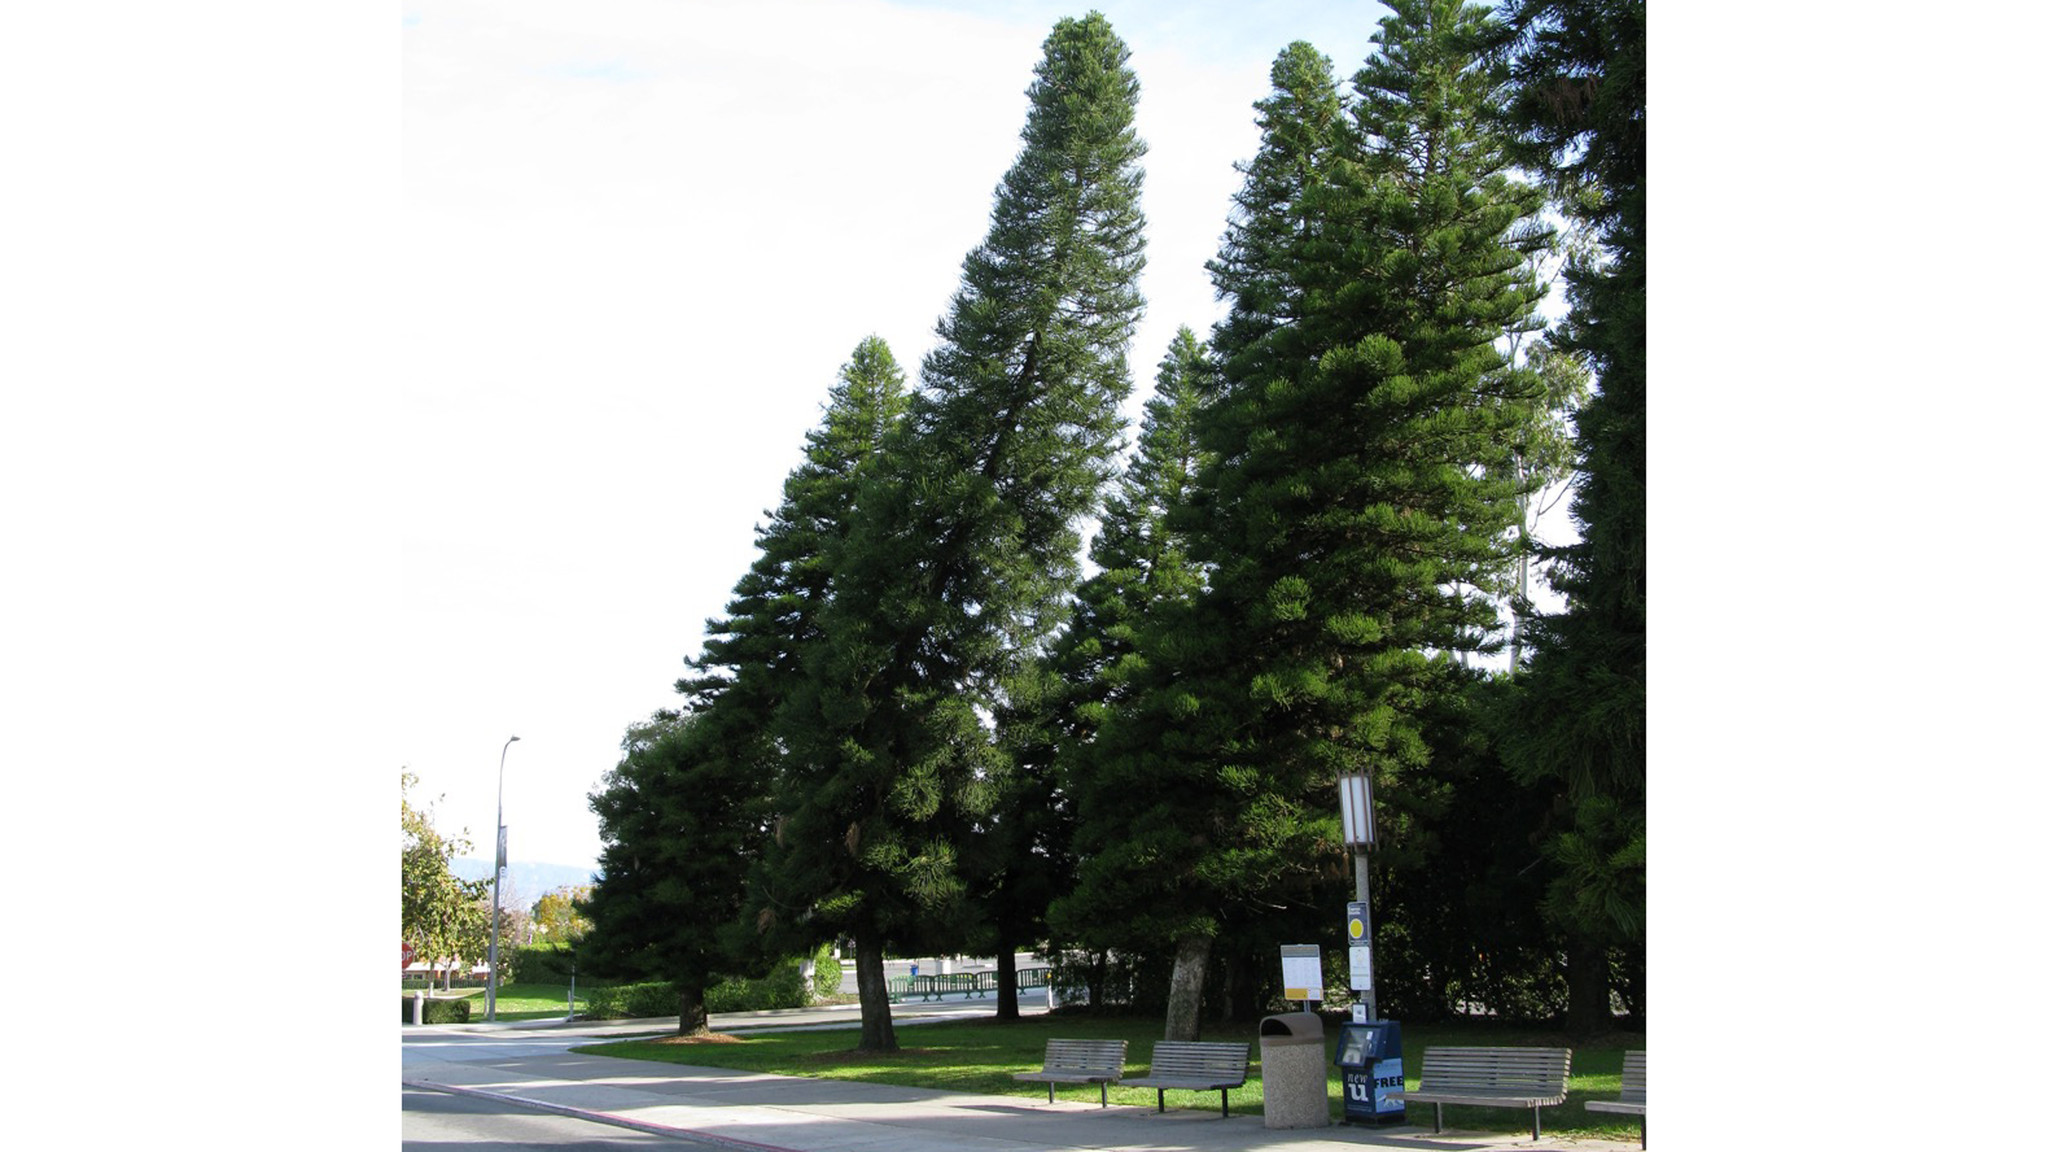 Lāna‘i’s Cook Island Pine Trees